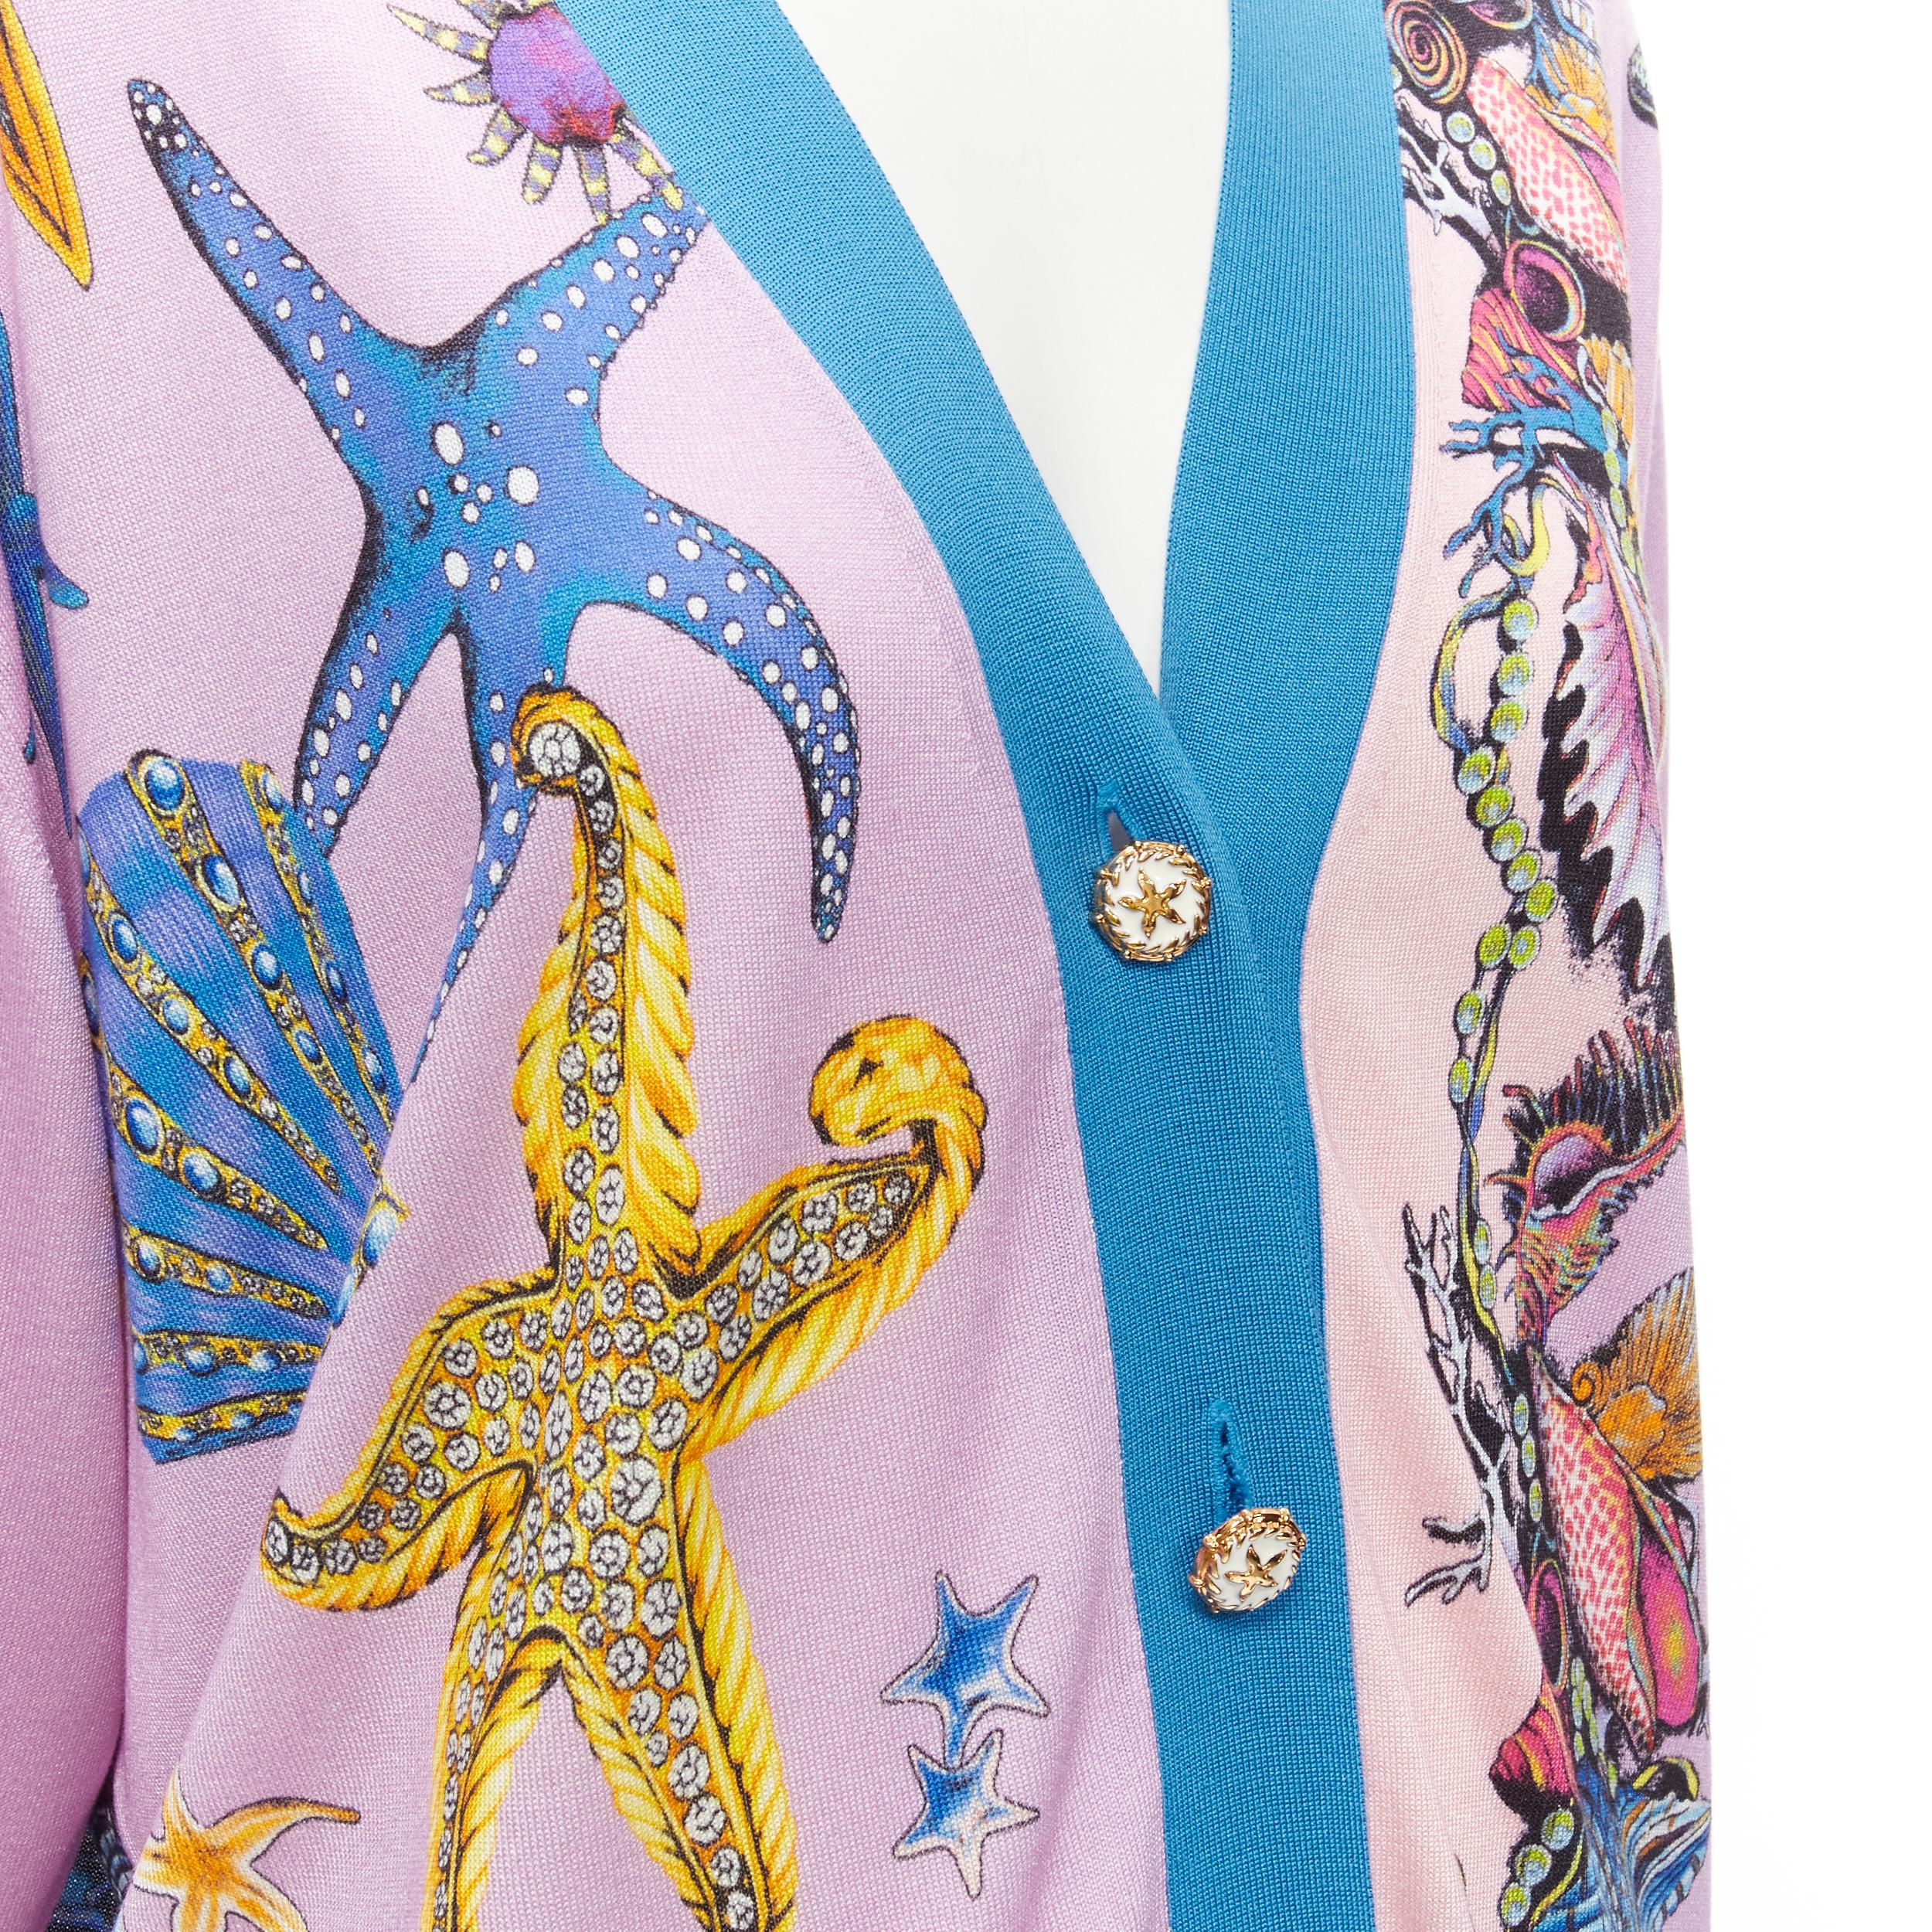 VERSACE 2021 Tresor De La Mer pink starfish knit cardigan top IT40 S
Reference: TGAS/C01813
Brand: Versace
Designer: Donatella Versace
Model: A89295 A237537 5V010
Collection: 2021 Tresor De La Mer
Material: Silk
Color: Pink, Purple
Pattern: